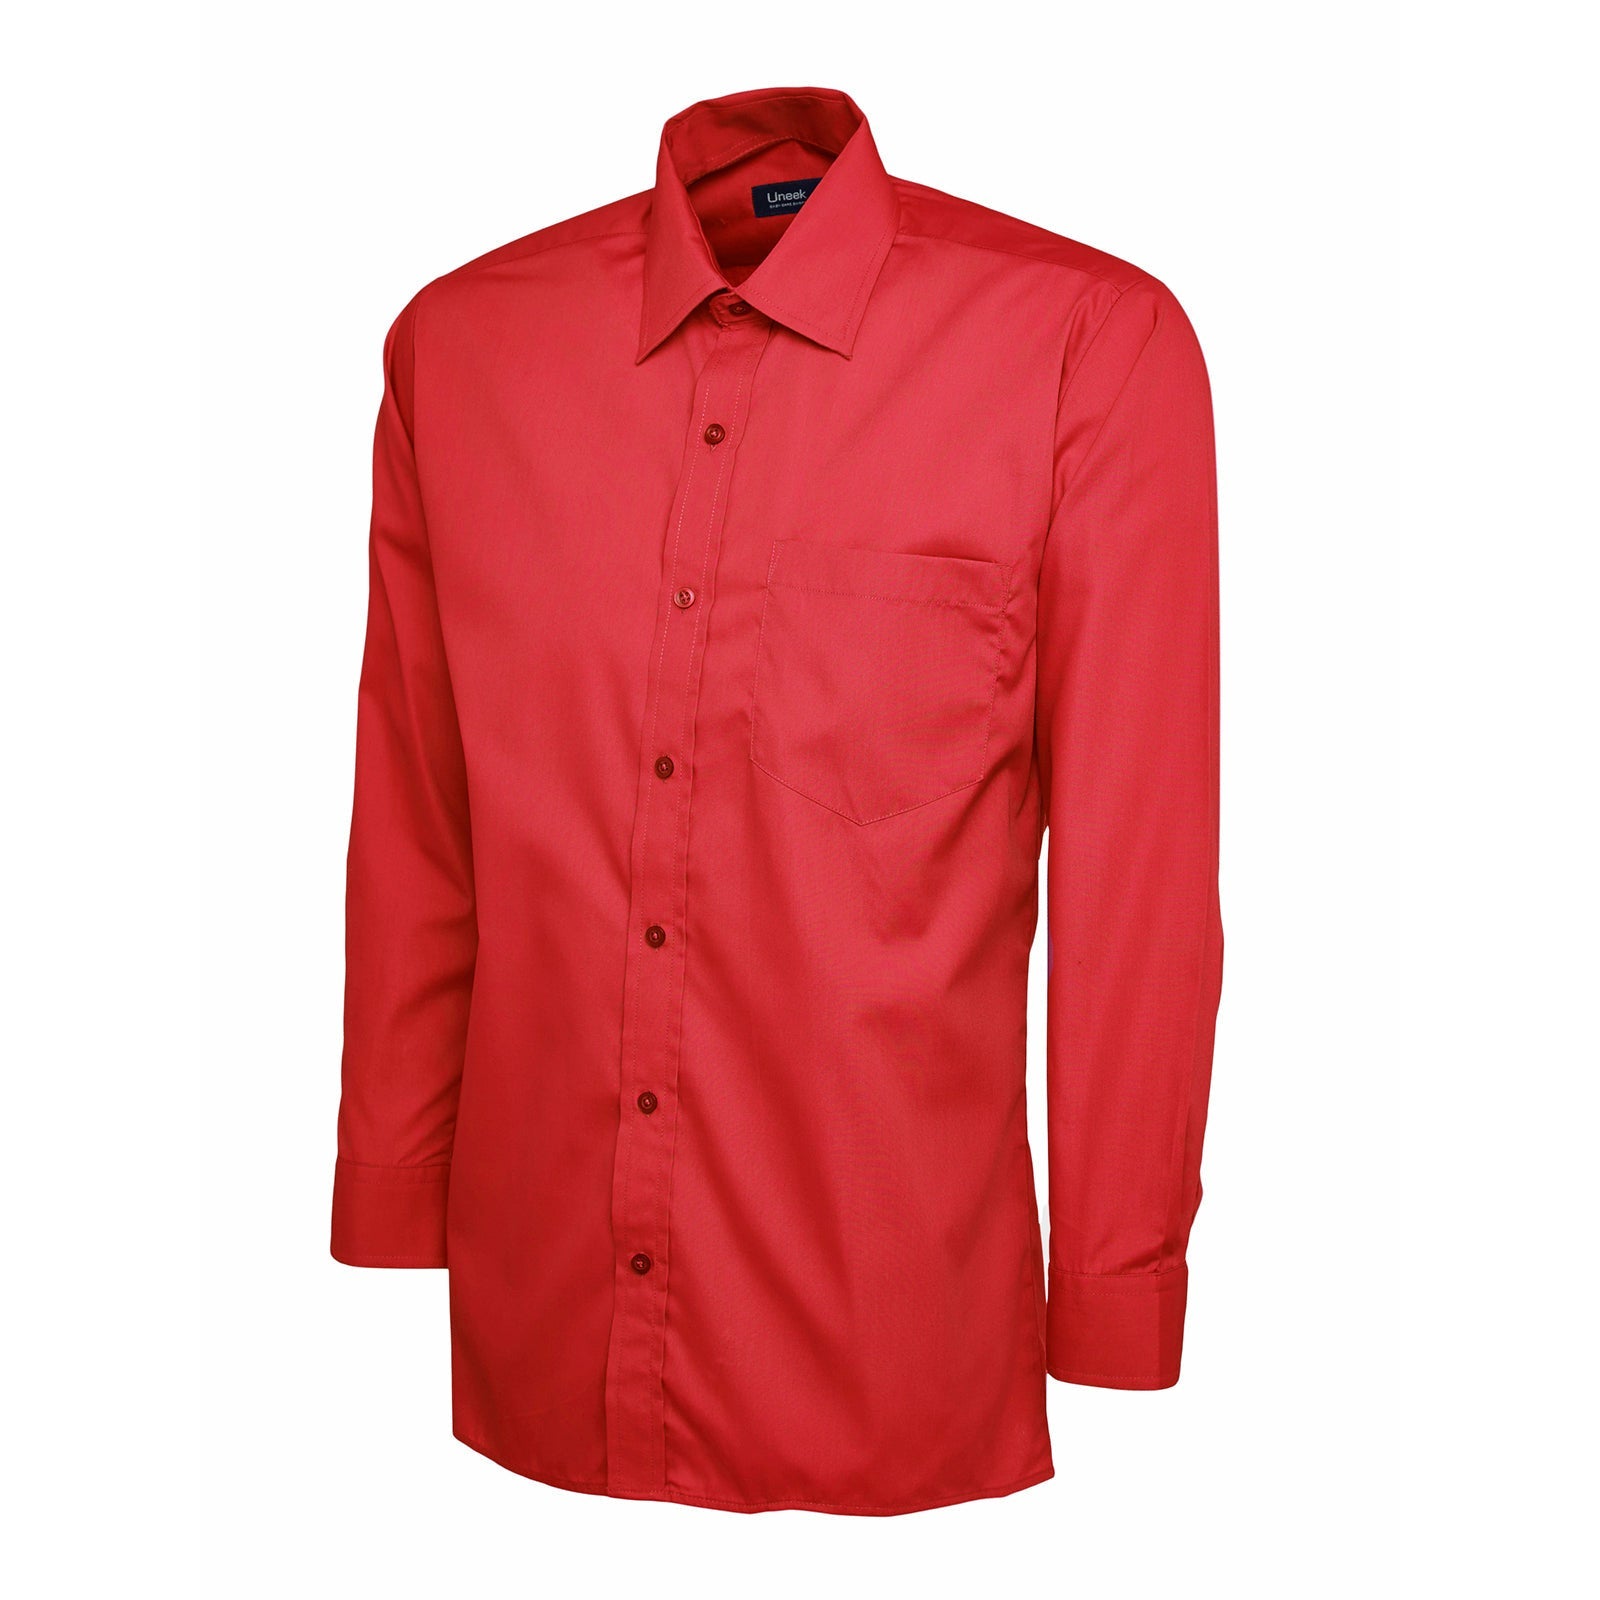 Mens Poplin Full Sleeve Shirt (14.5 - 16.5) - Red